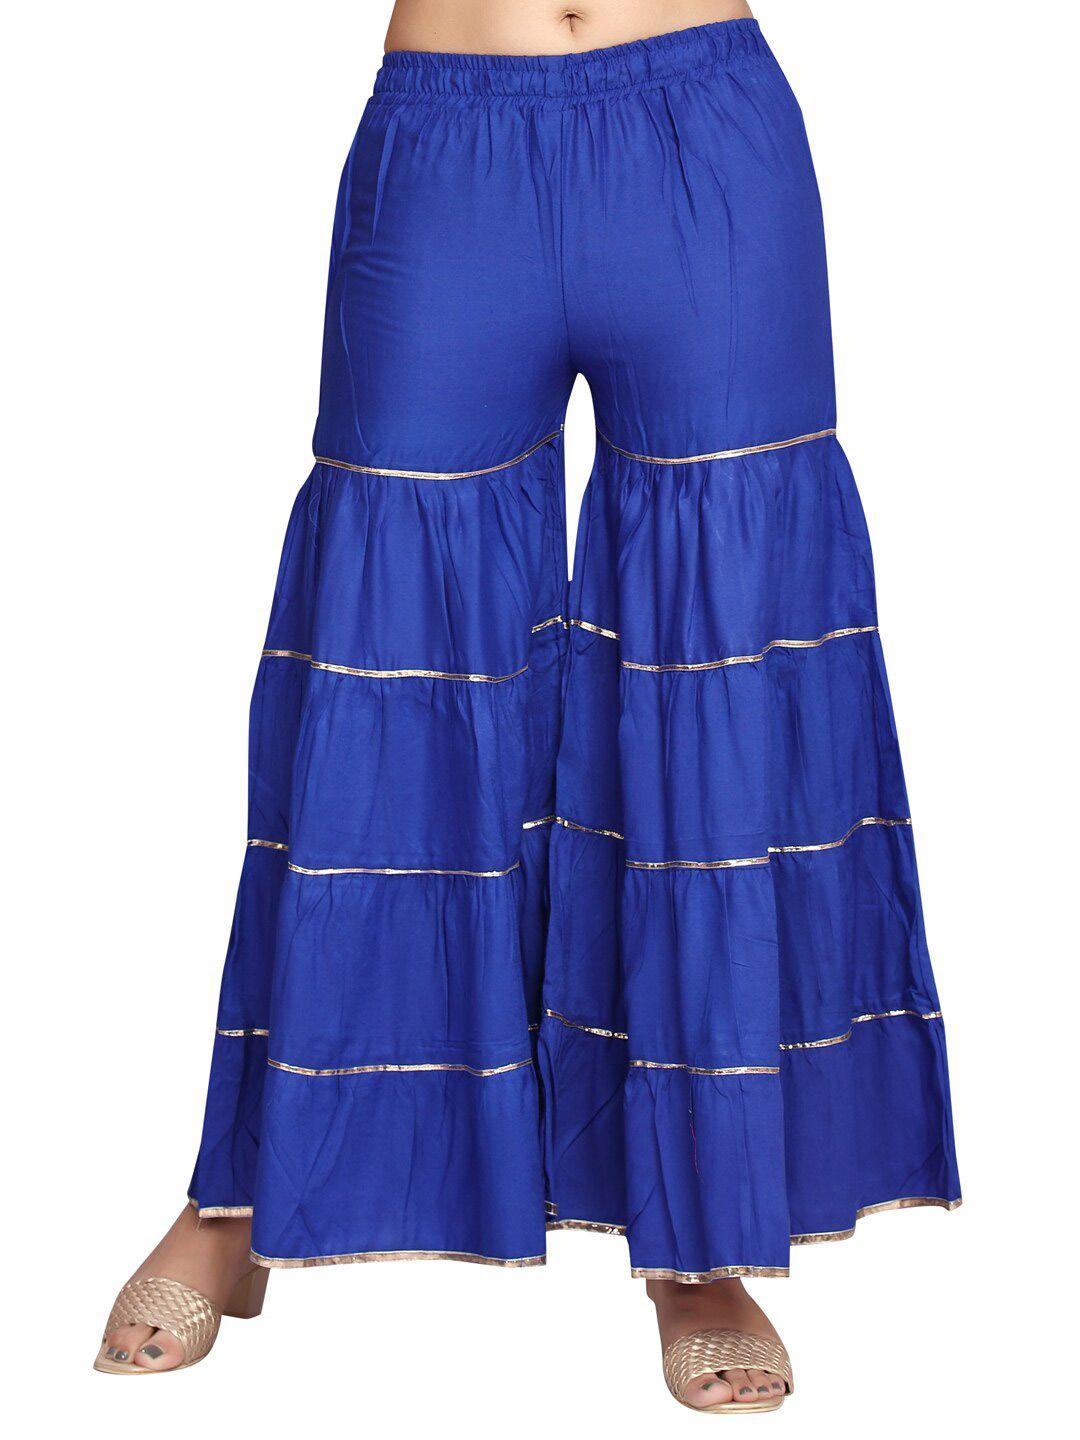 aarika women blue & gold-toned striped flared ethnic palazzos